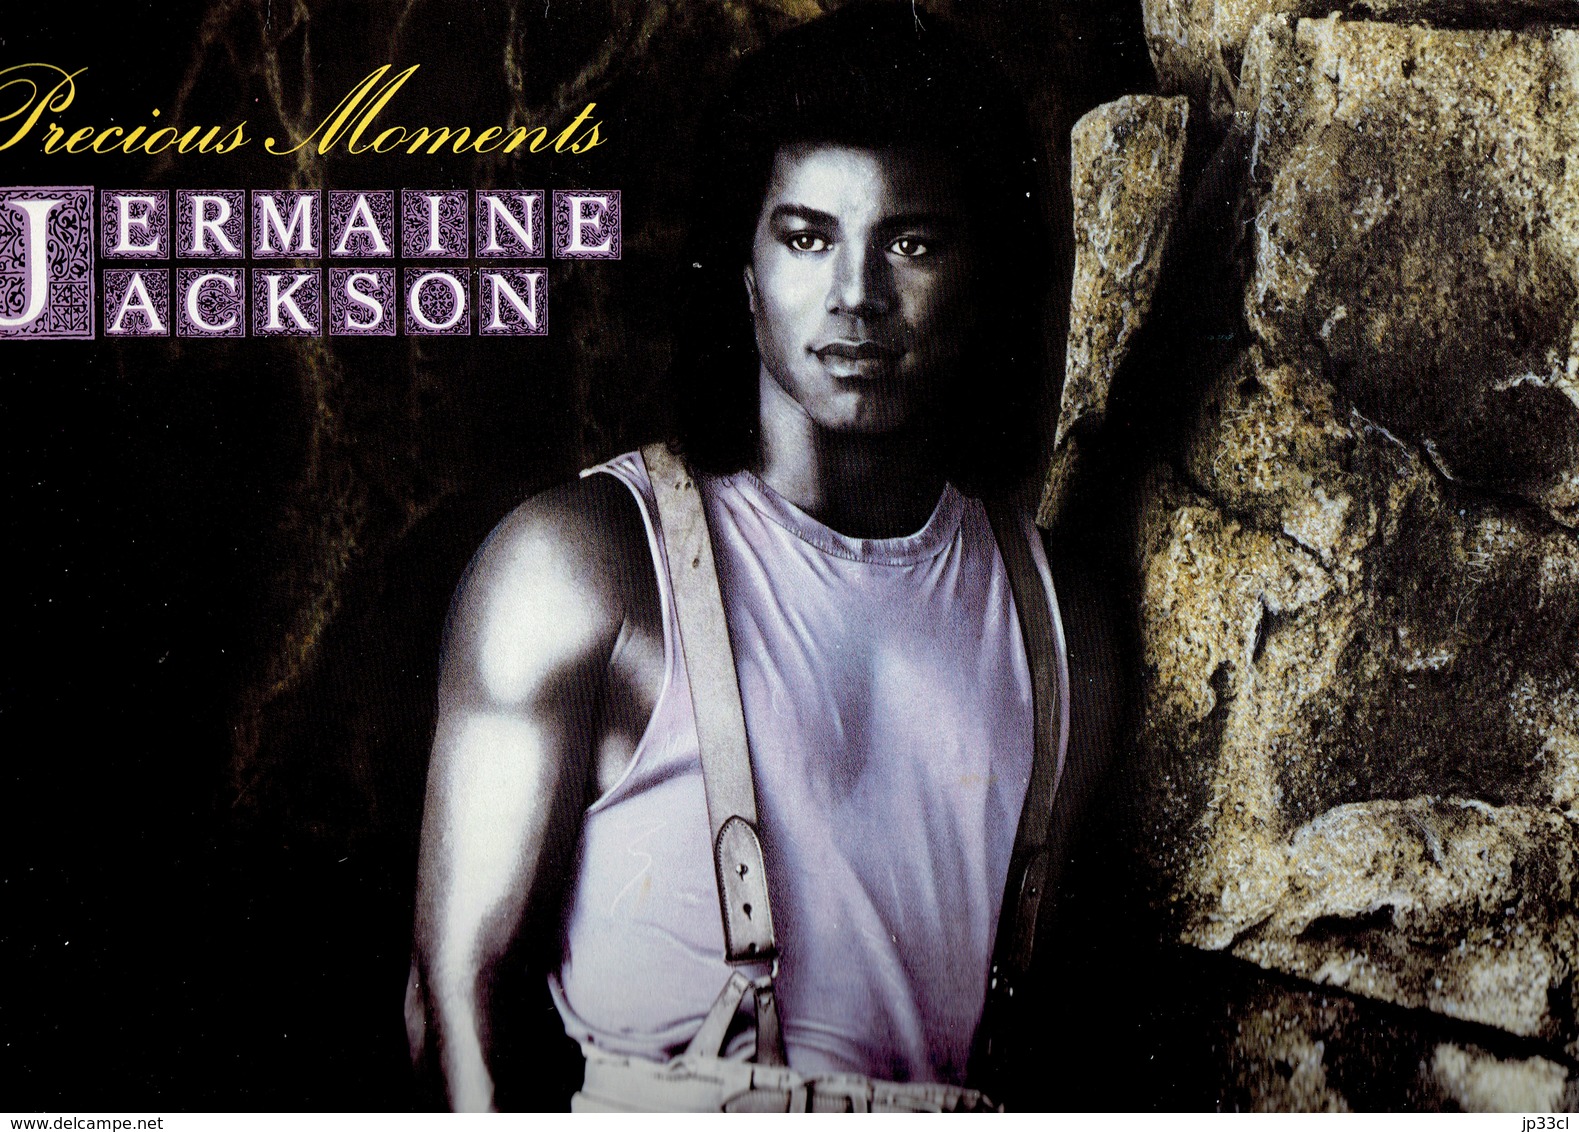 33 T Vinyle Precious Moments By Jermaine Jackson (Arista) - Disco, Pop